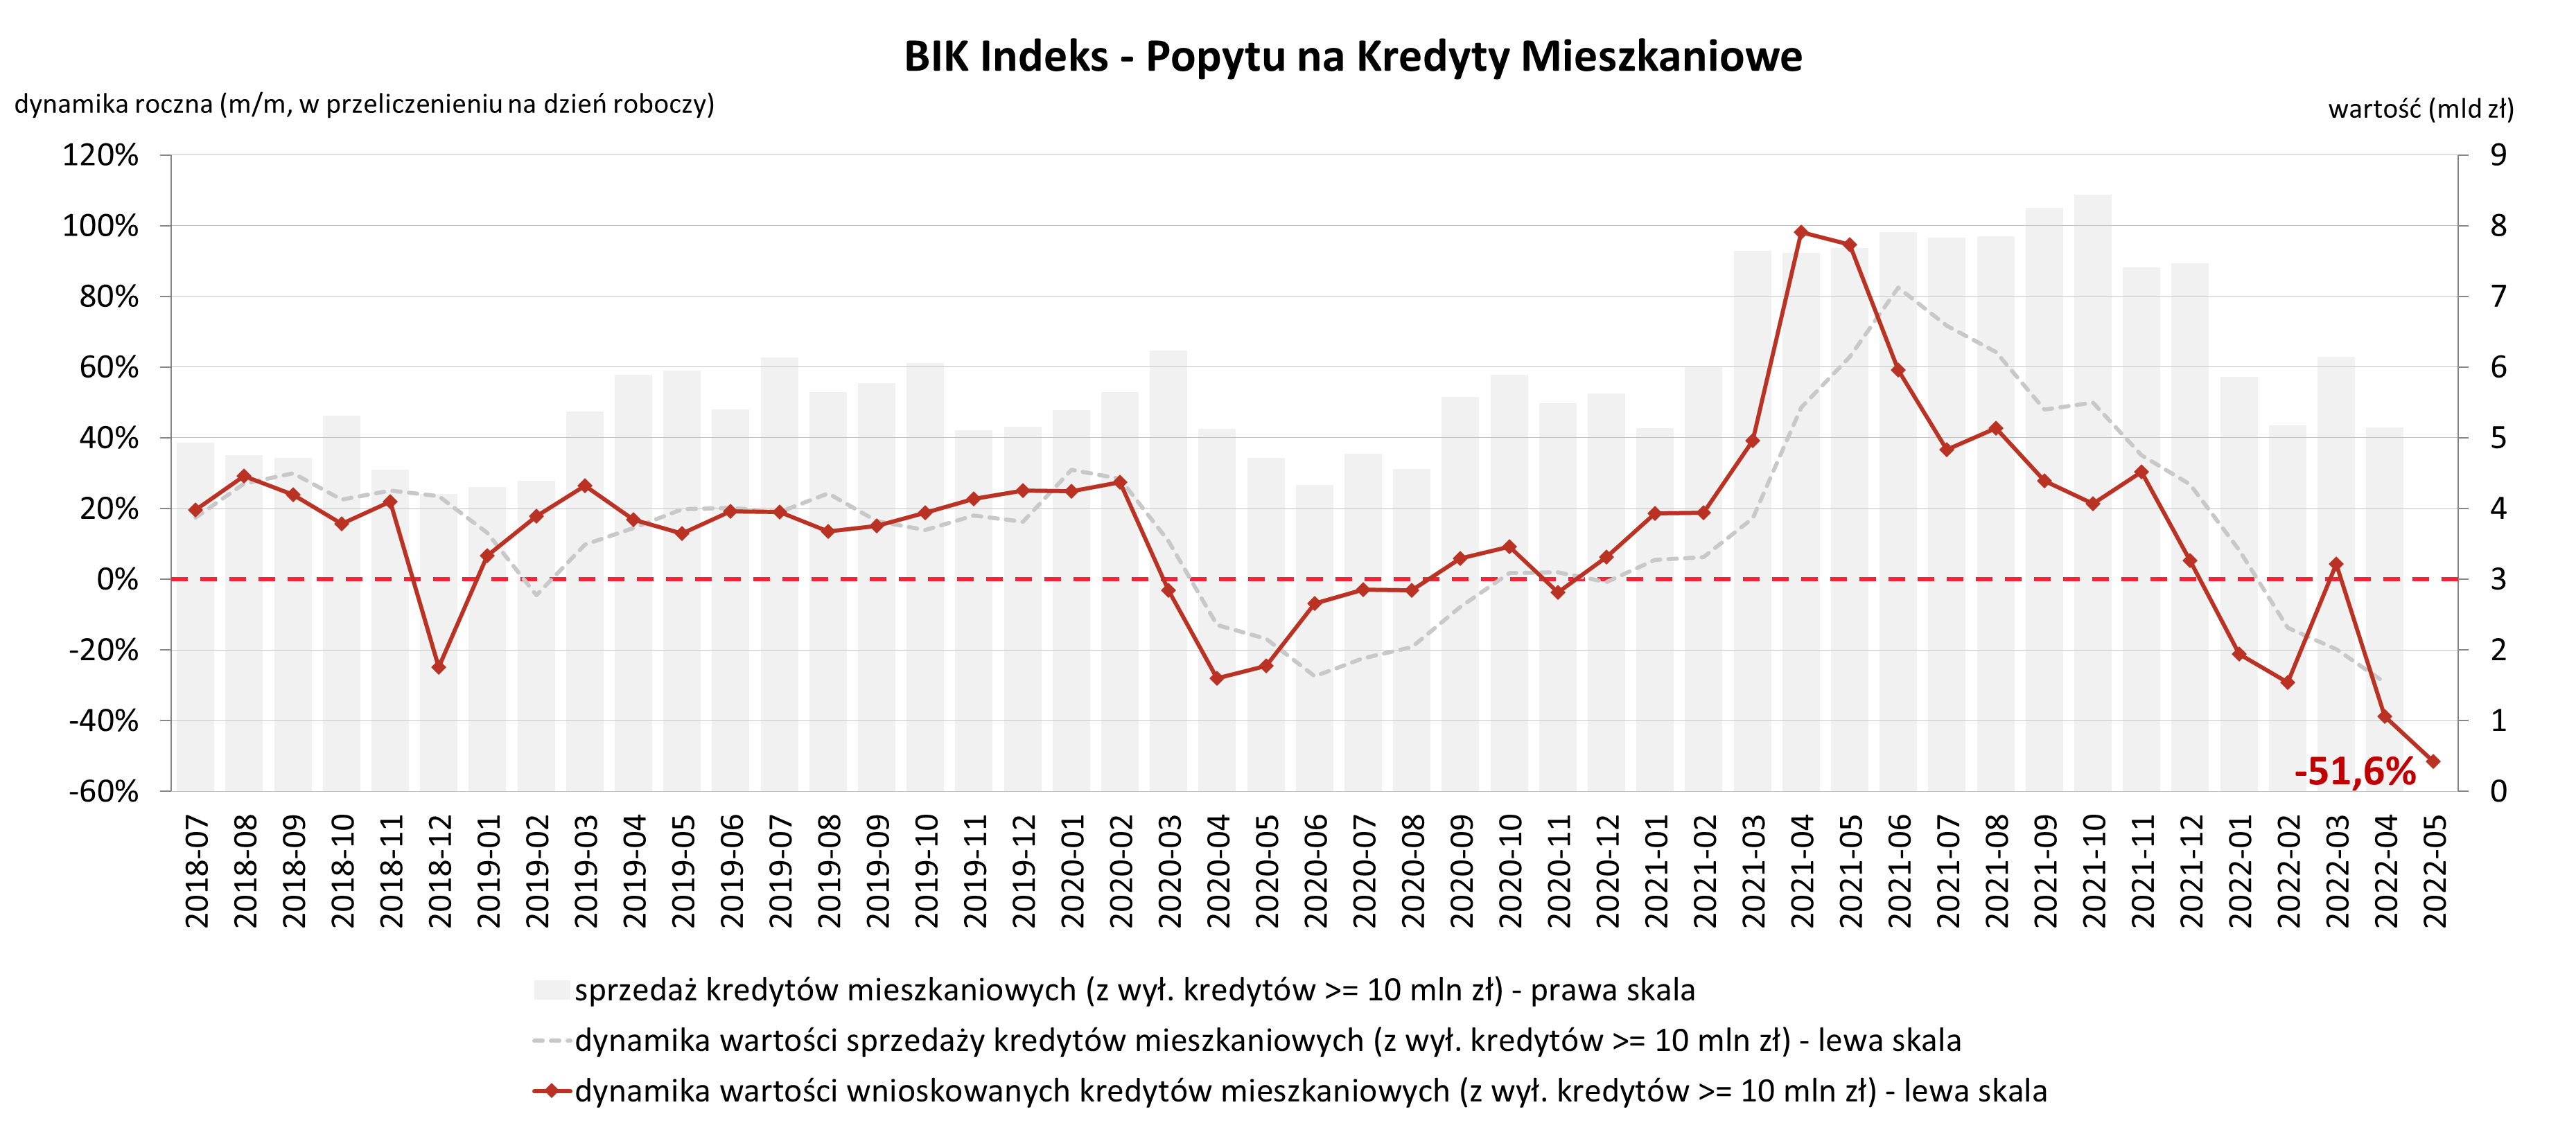 Popyt na kredyty mieszkaniowe w Polsce